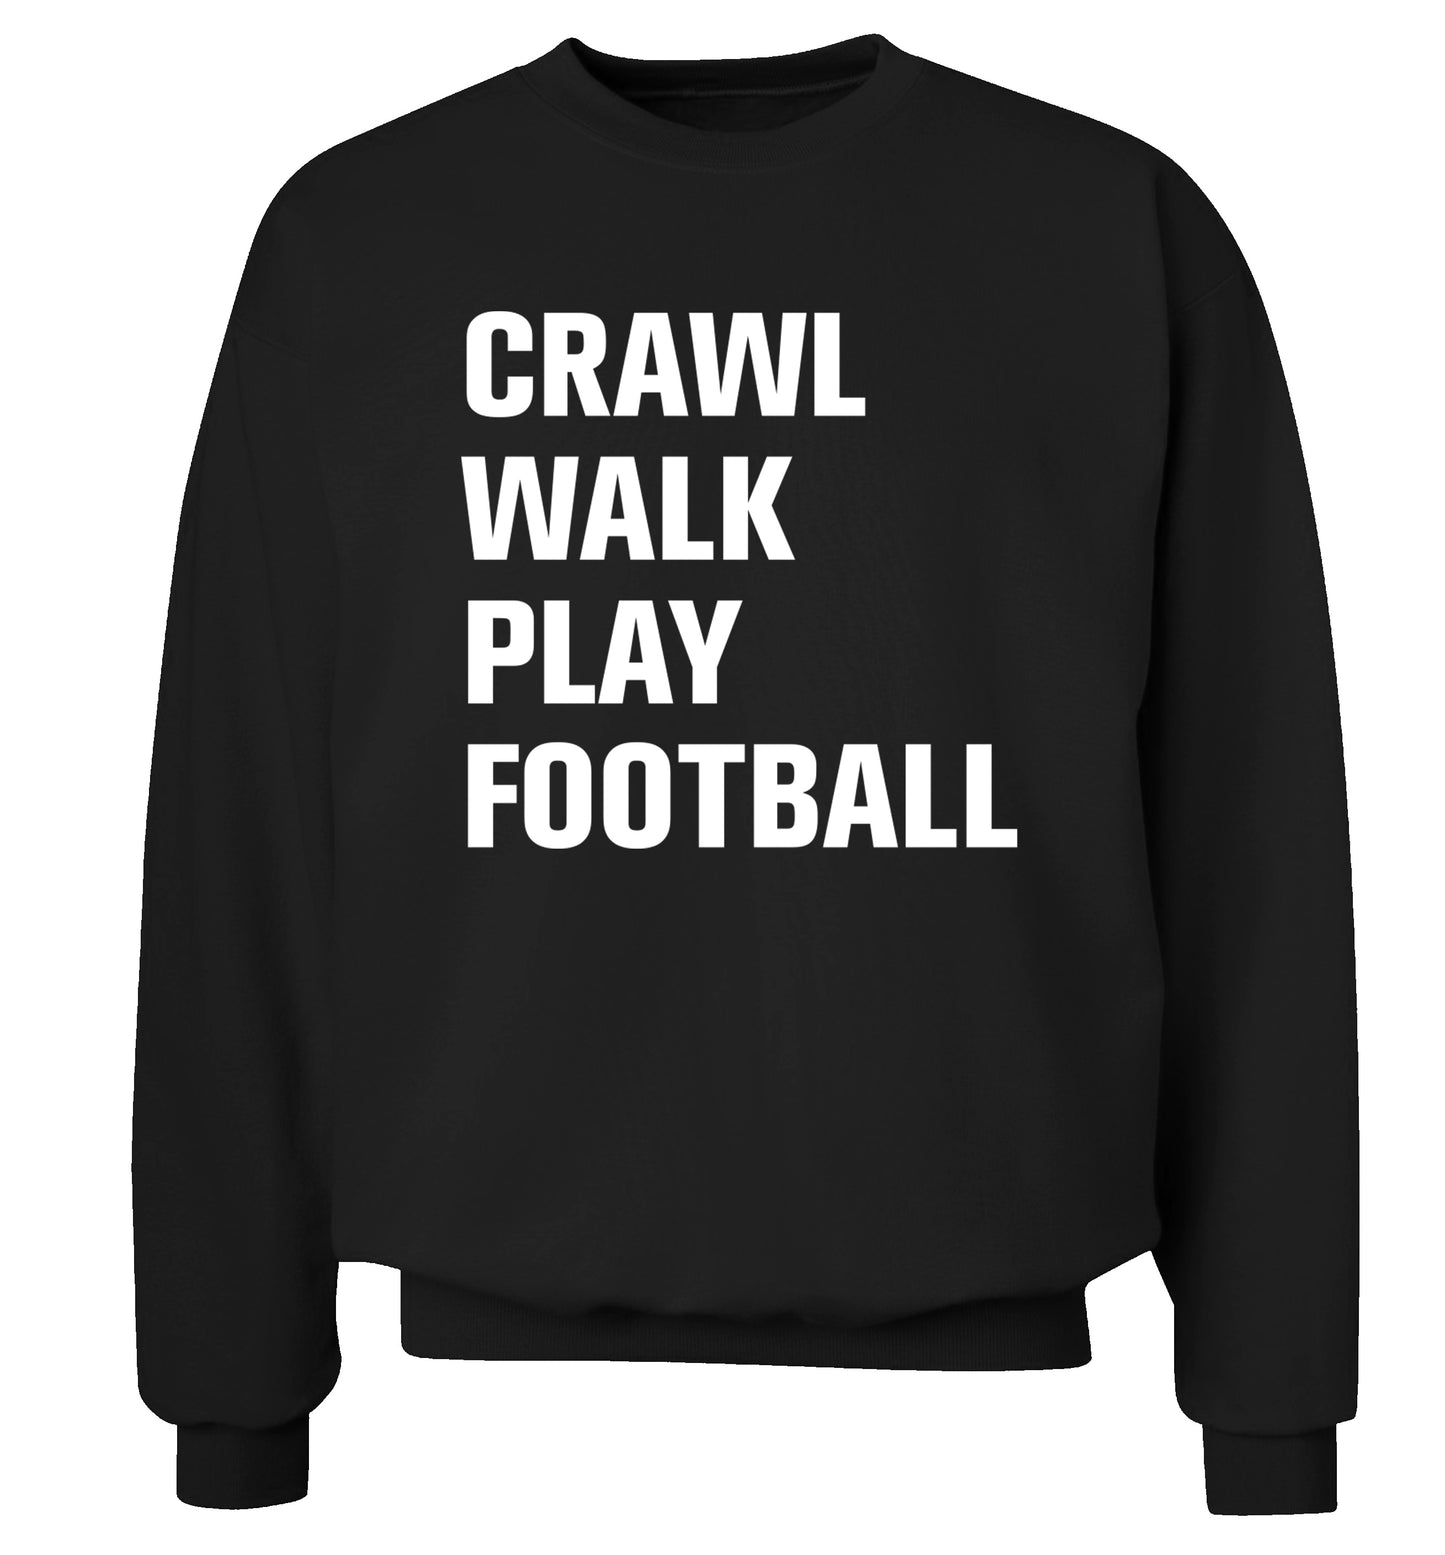 Crawl, walk, play football Adult's unisex black Sweater 2XL